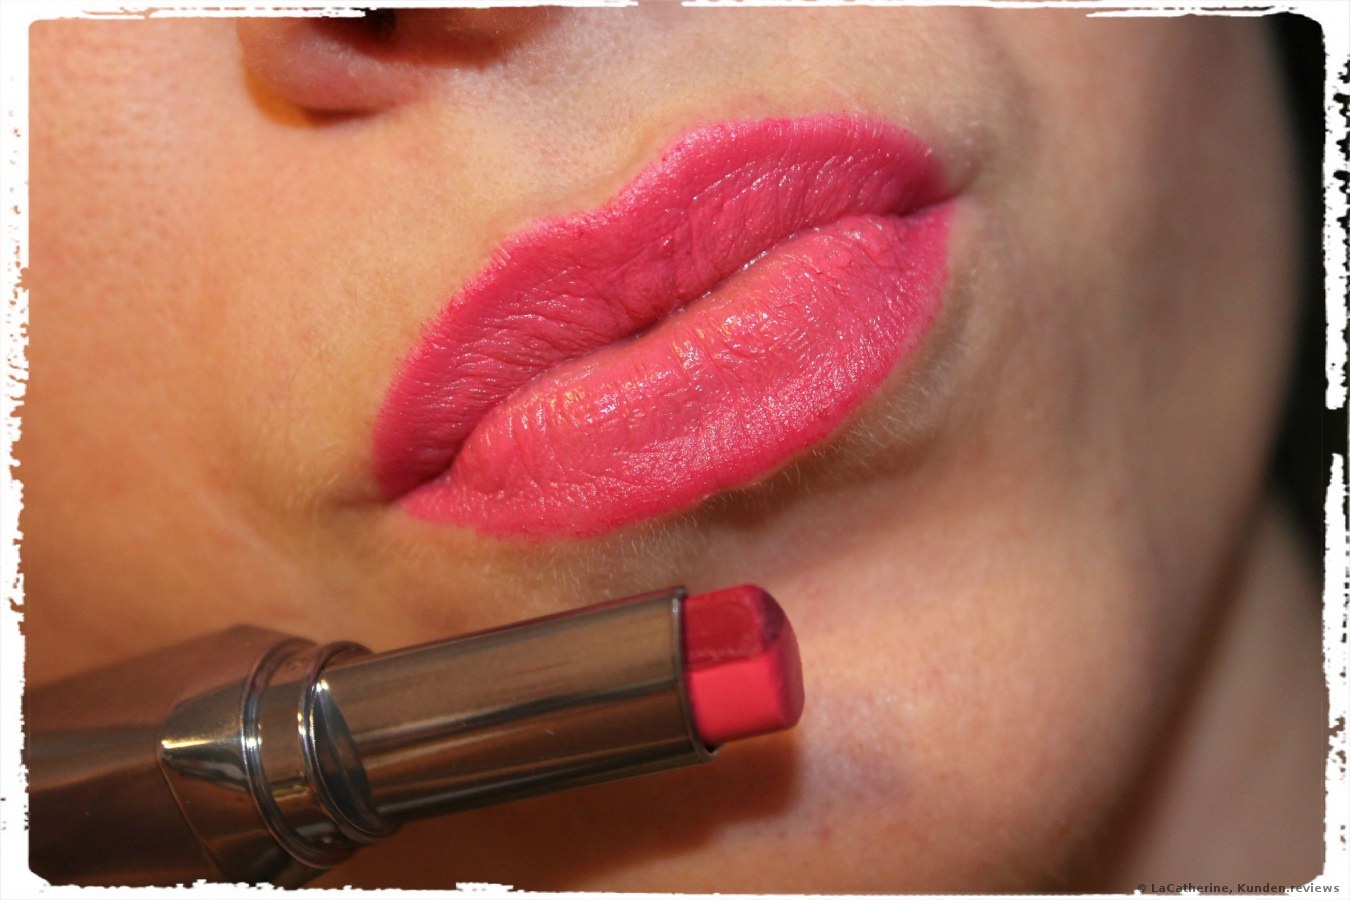 They're Real Lipstick - Double the Lip Lippenstift von Benefit